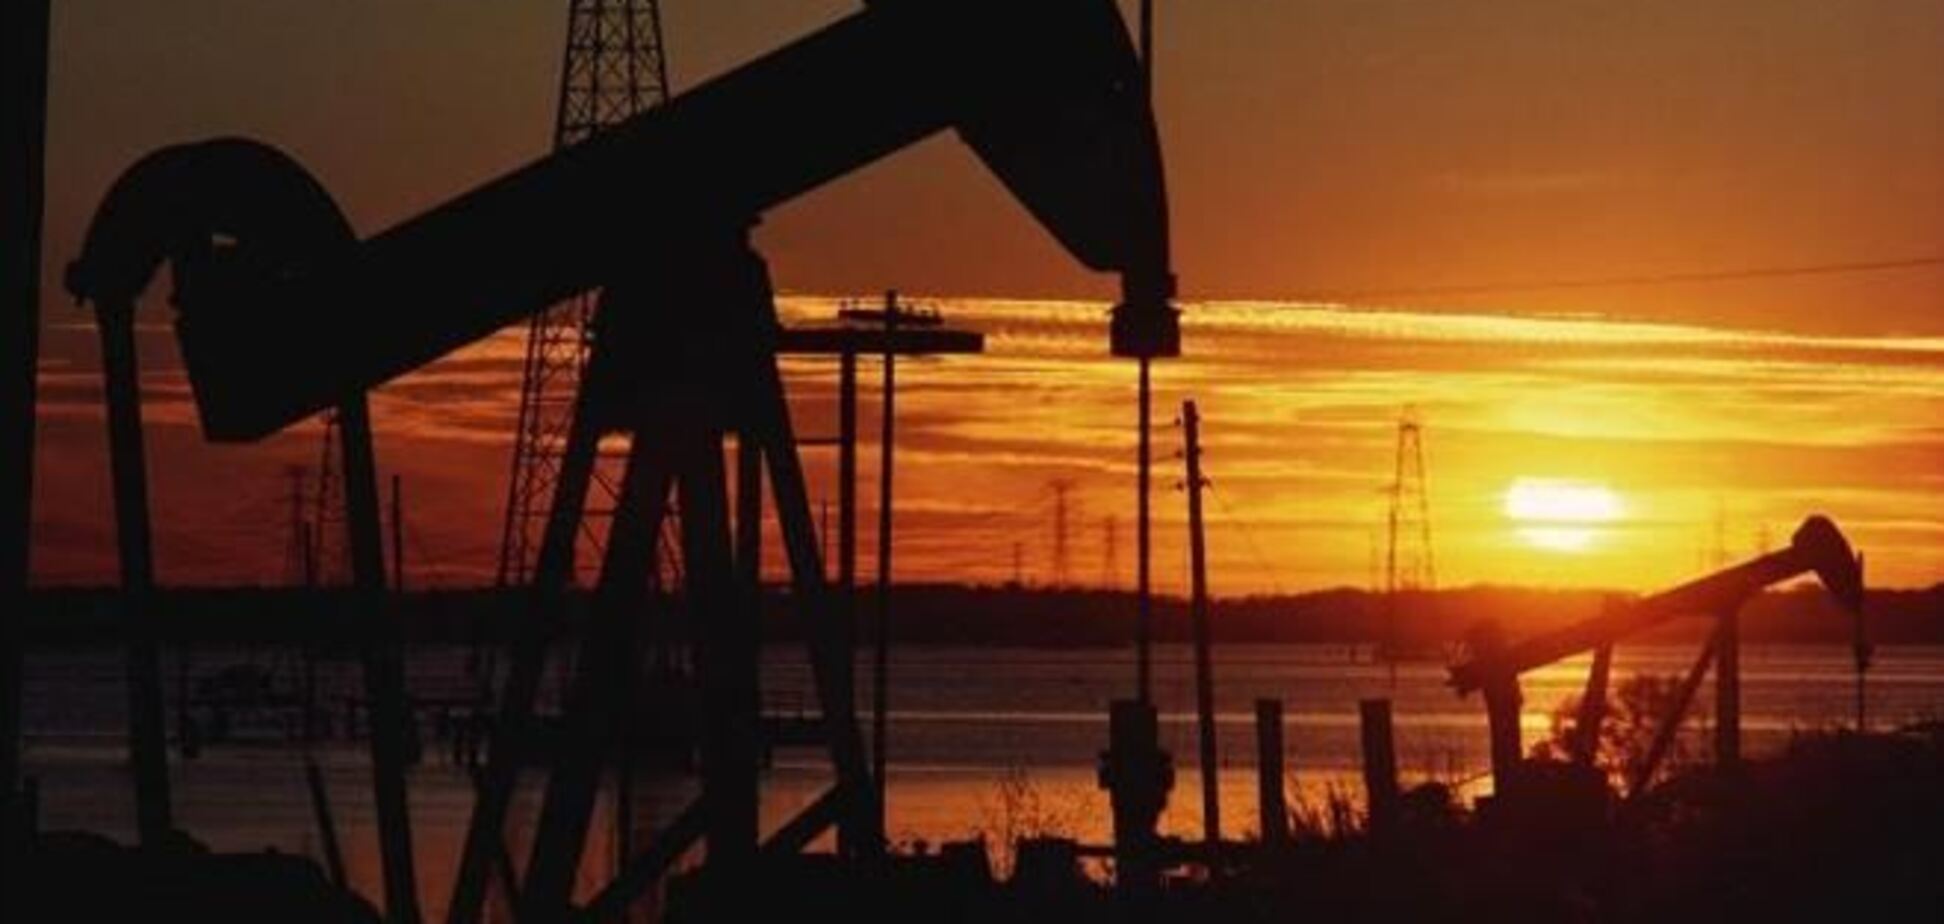 Украина сократила импорт нефти почти в пять раз 